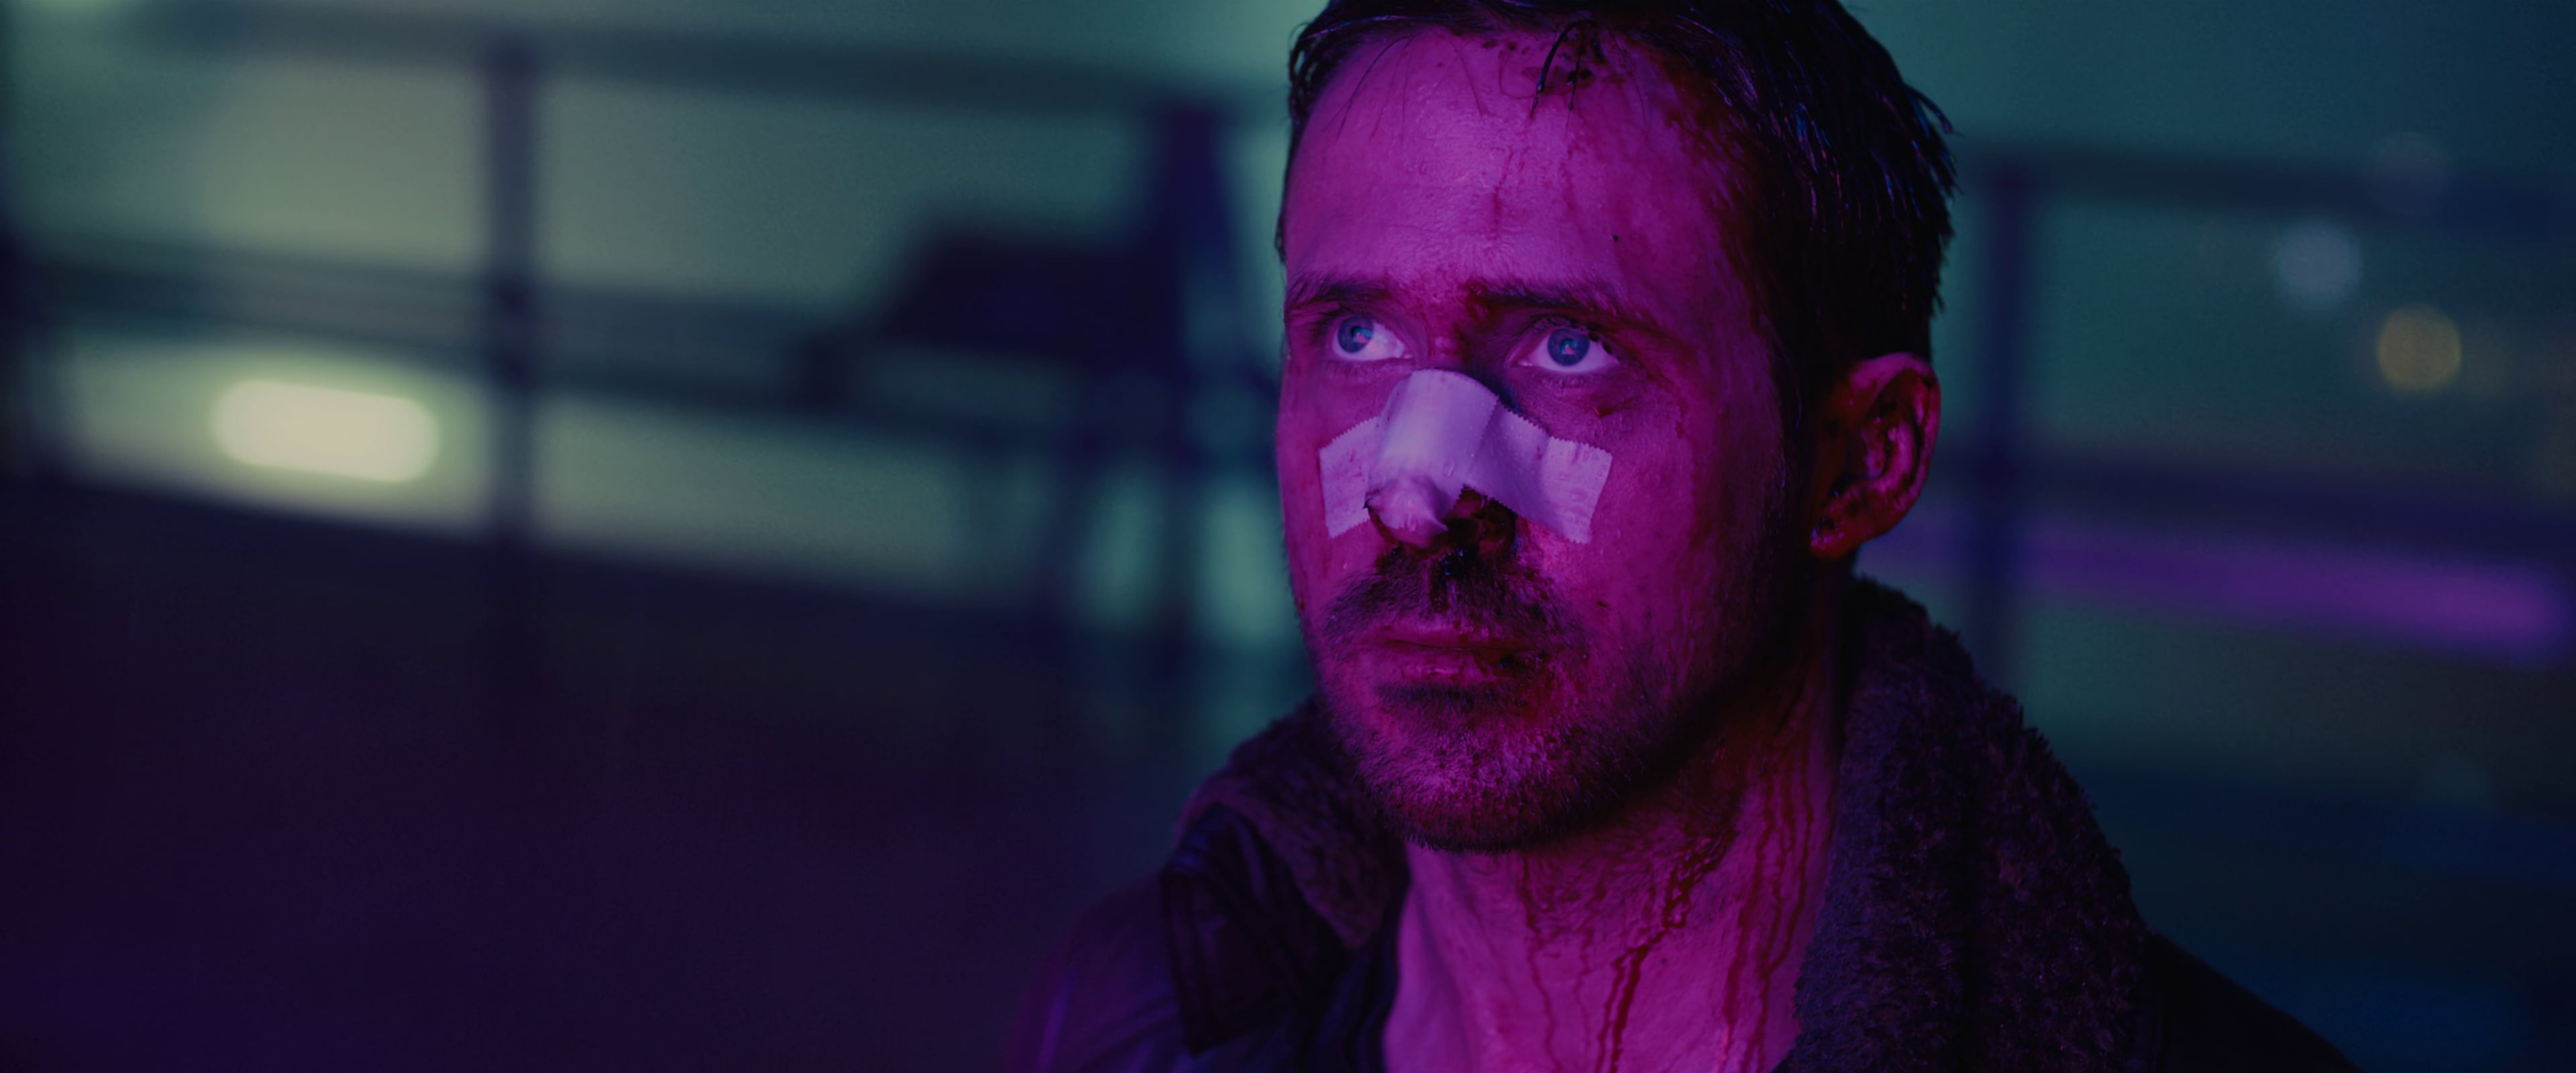 Free Download Hd Wallpaper Blade Runner Blade Runner 2049 Cyberpunk Ryan Gosling Movies